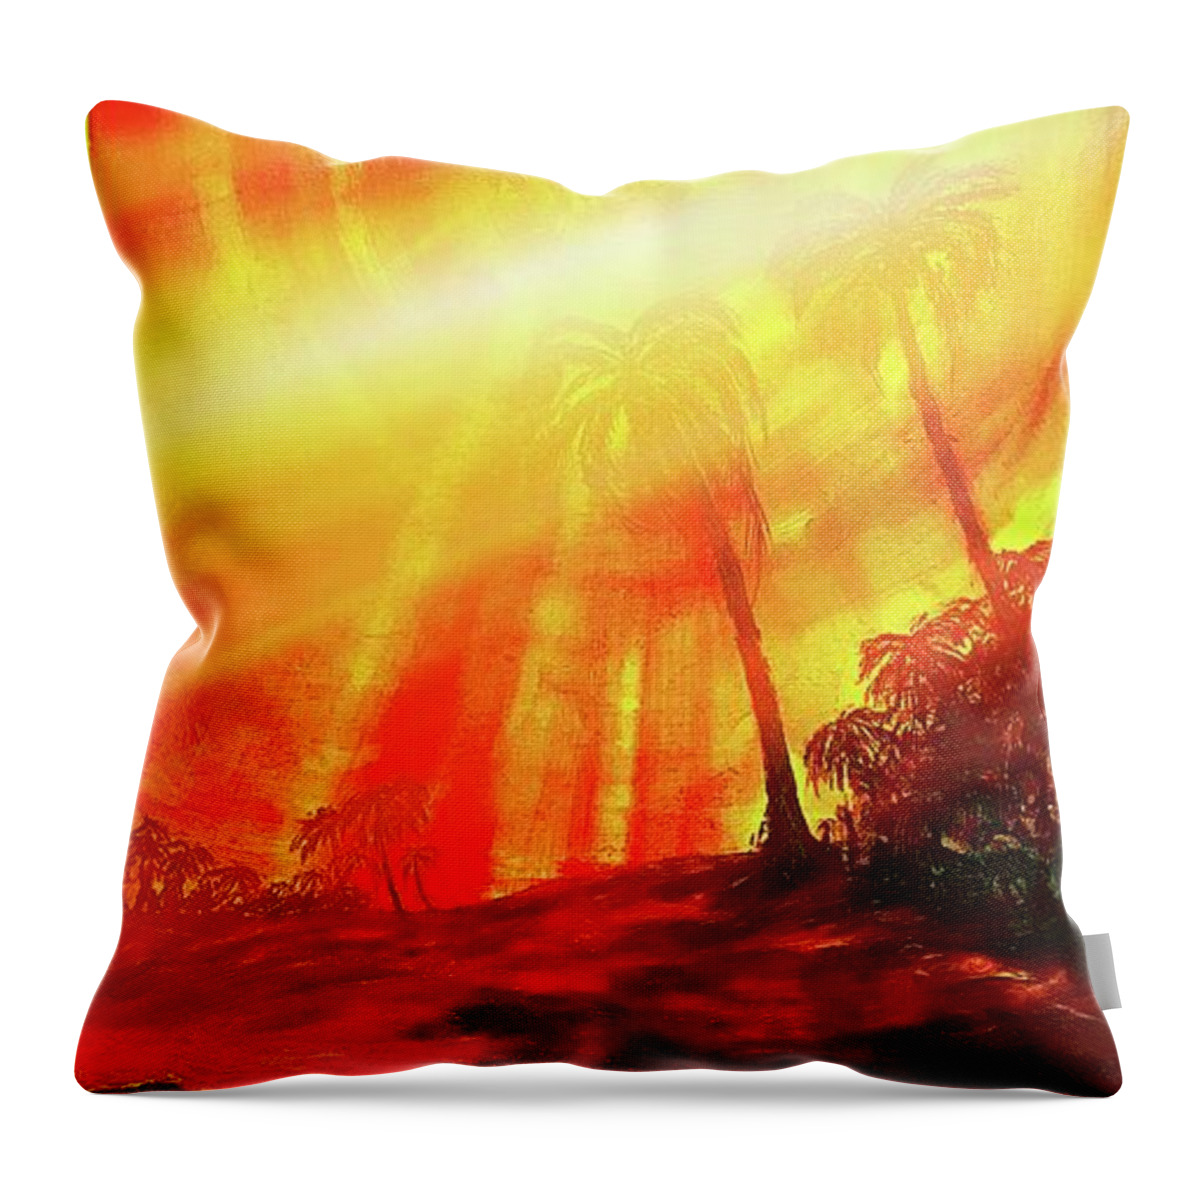 Sunset Beach Throw Pillow featuring the painting Sunburst by Michael Silbaugh